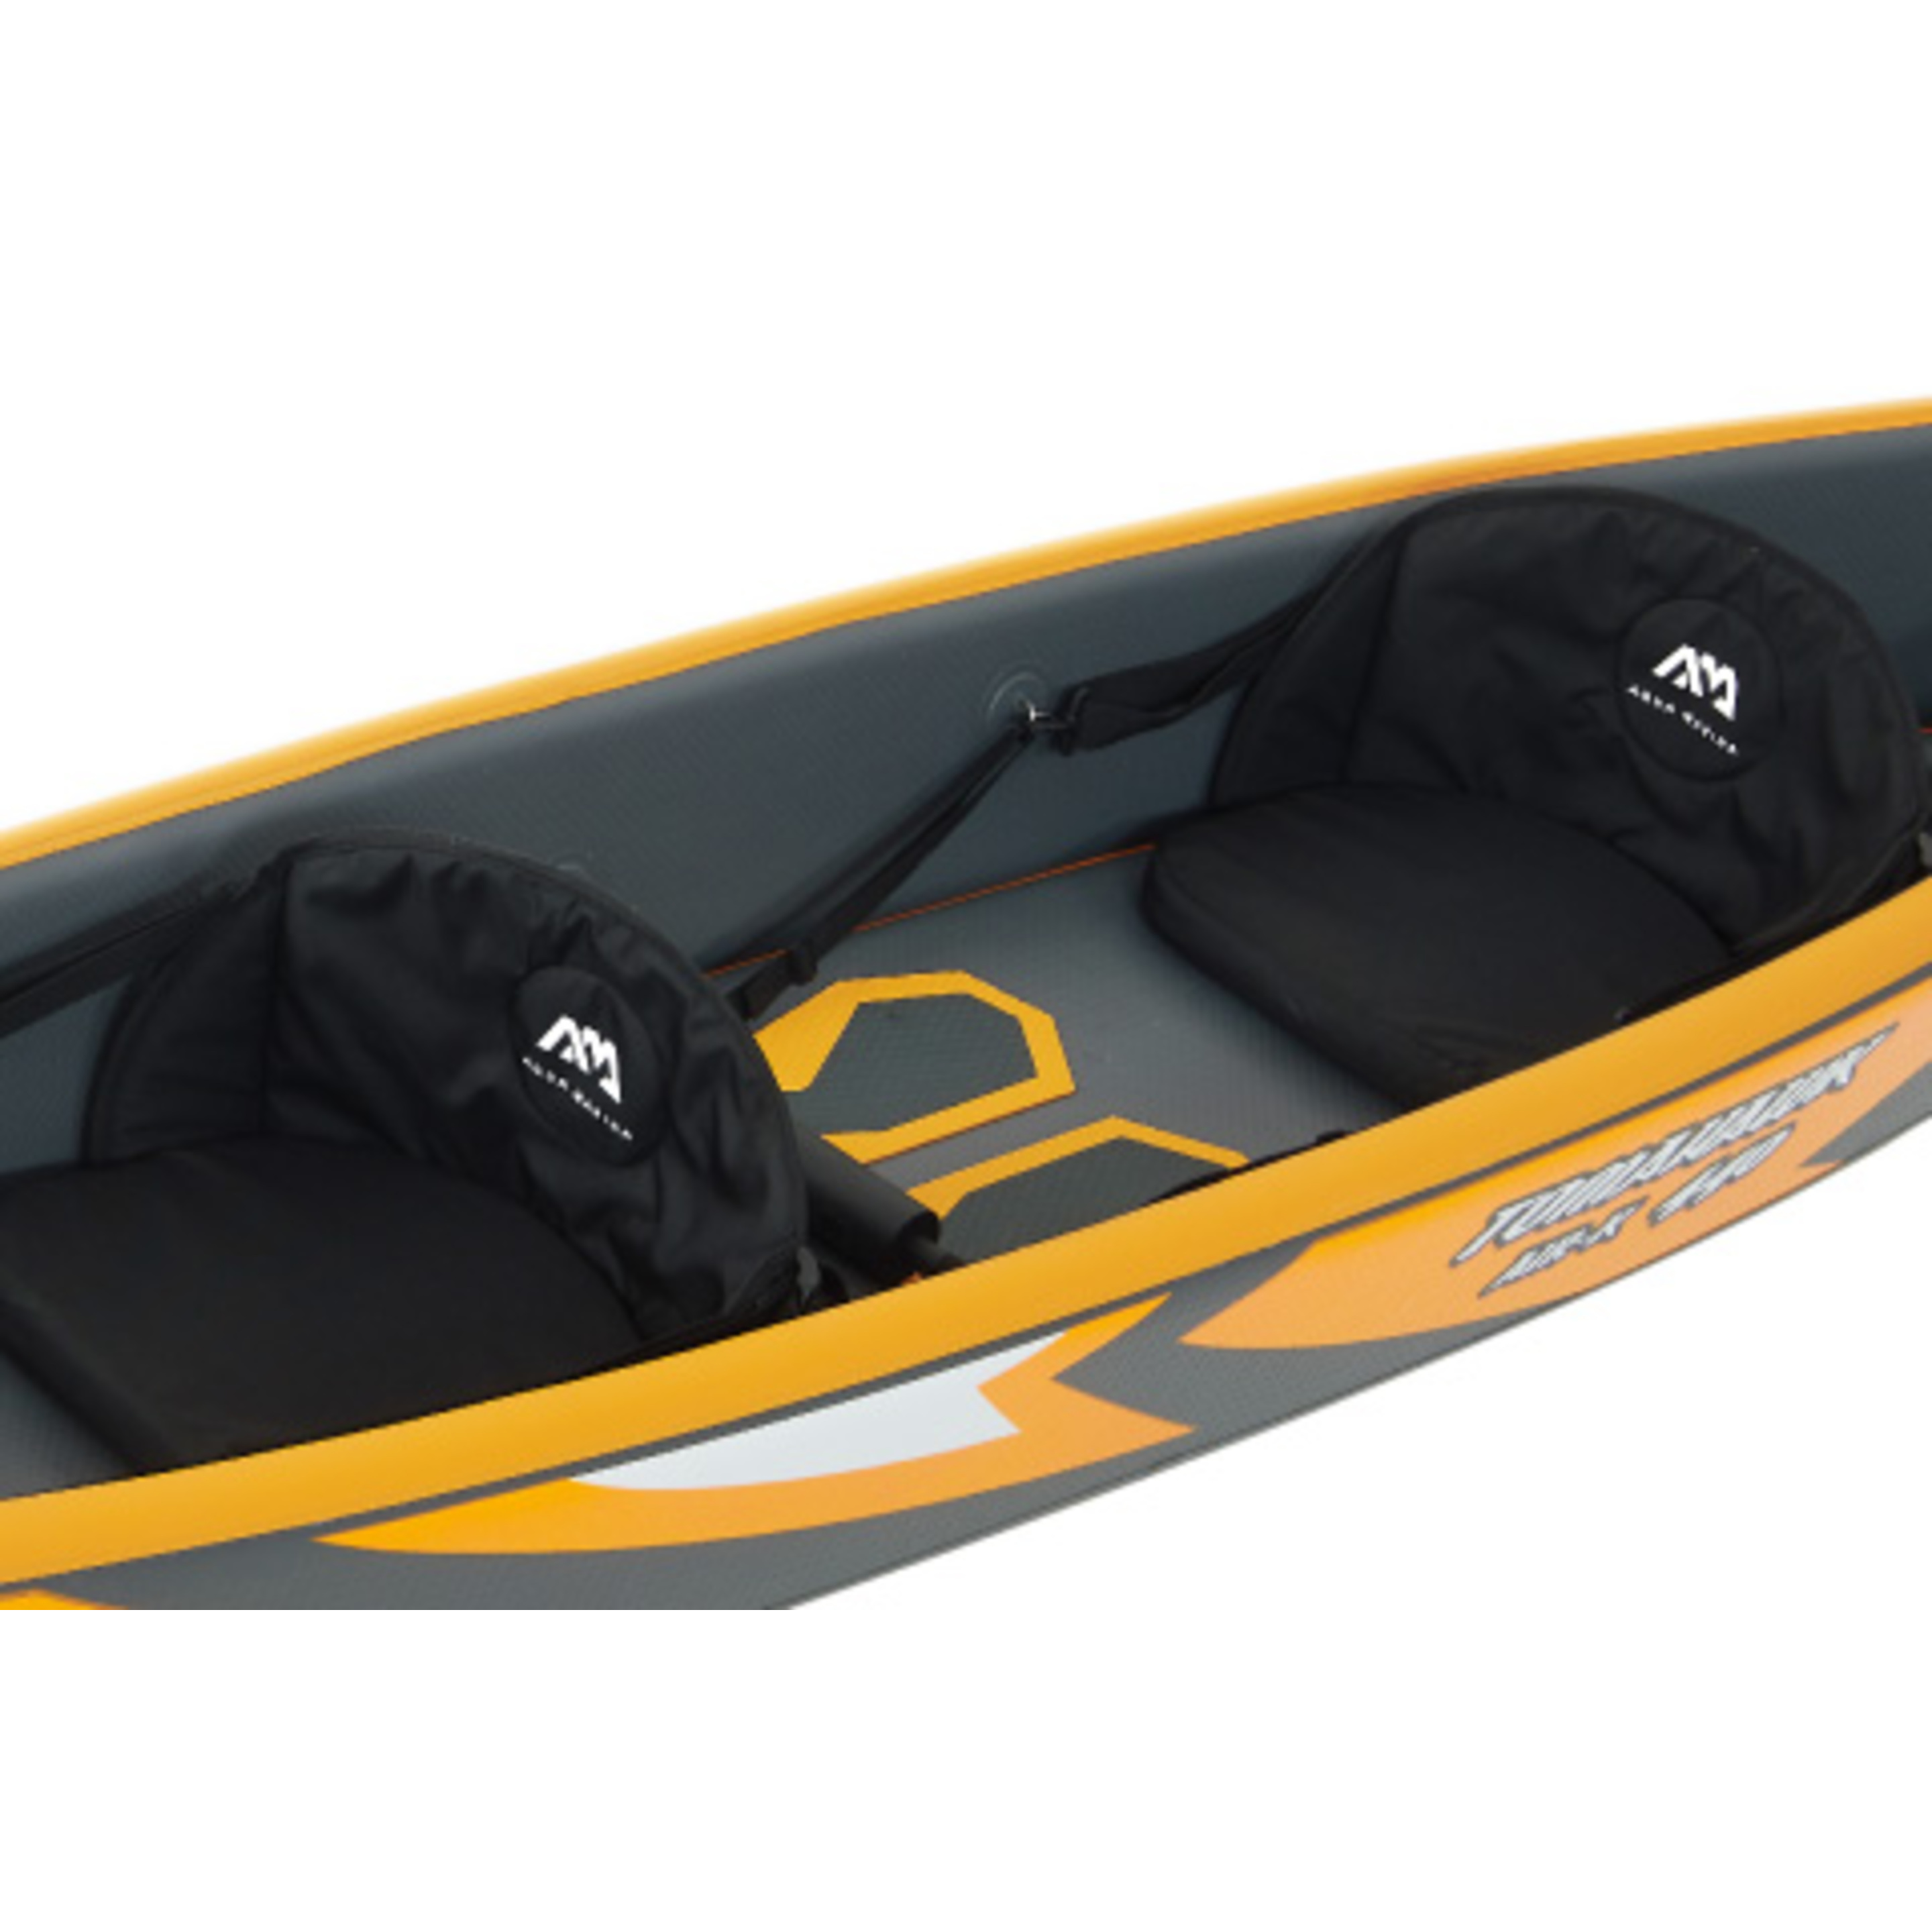 Kayak Hinchable Tomahawk Air-k 440 - Gris/Naranja - Kayak 2 plazas MKP